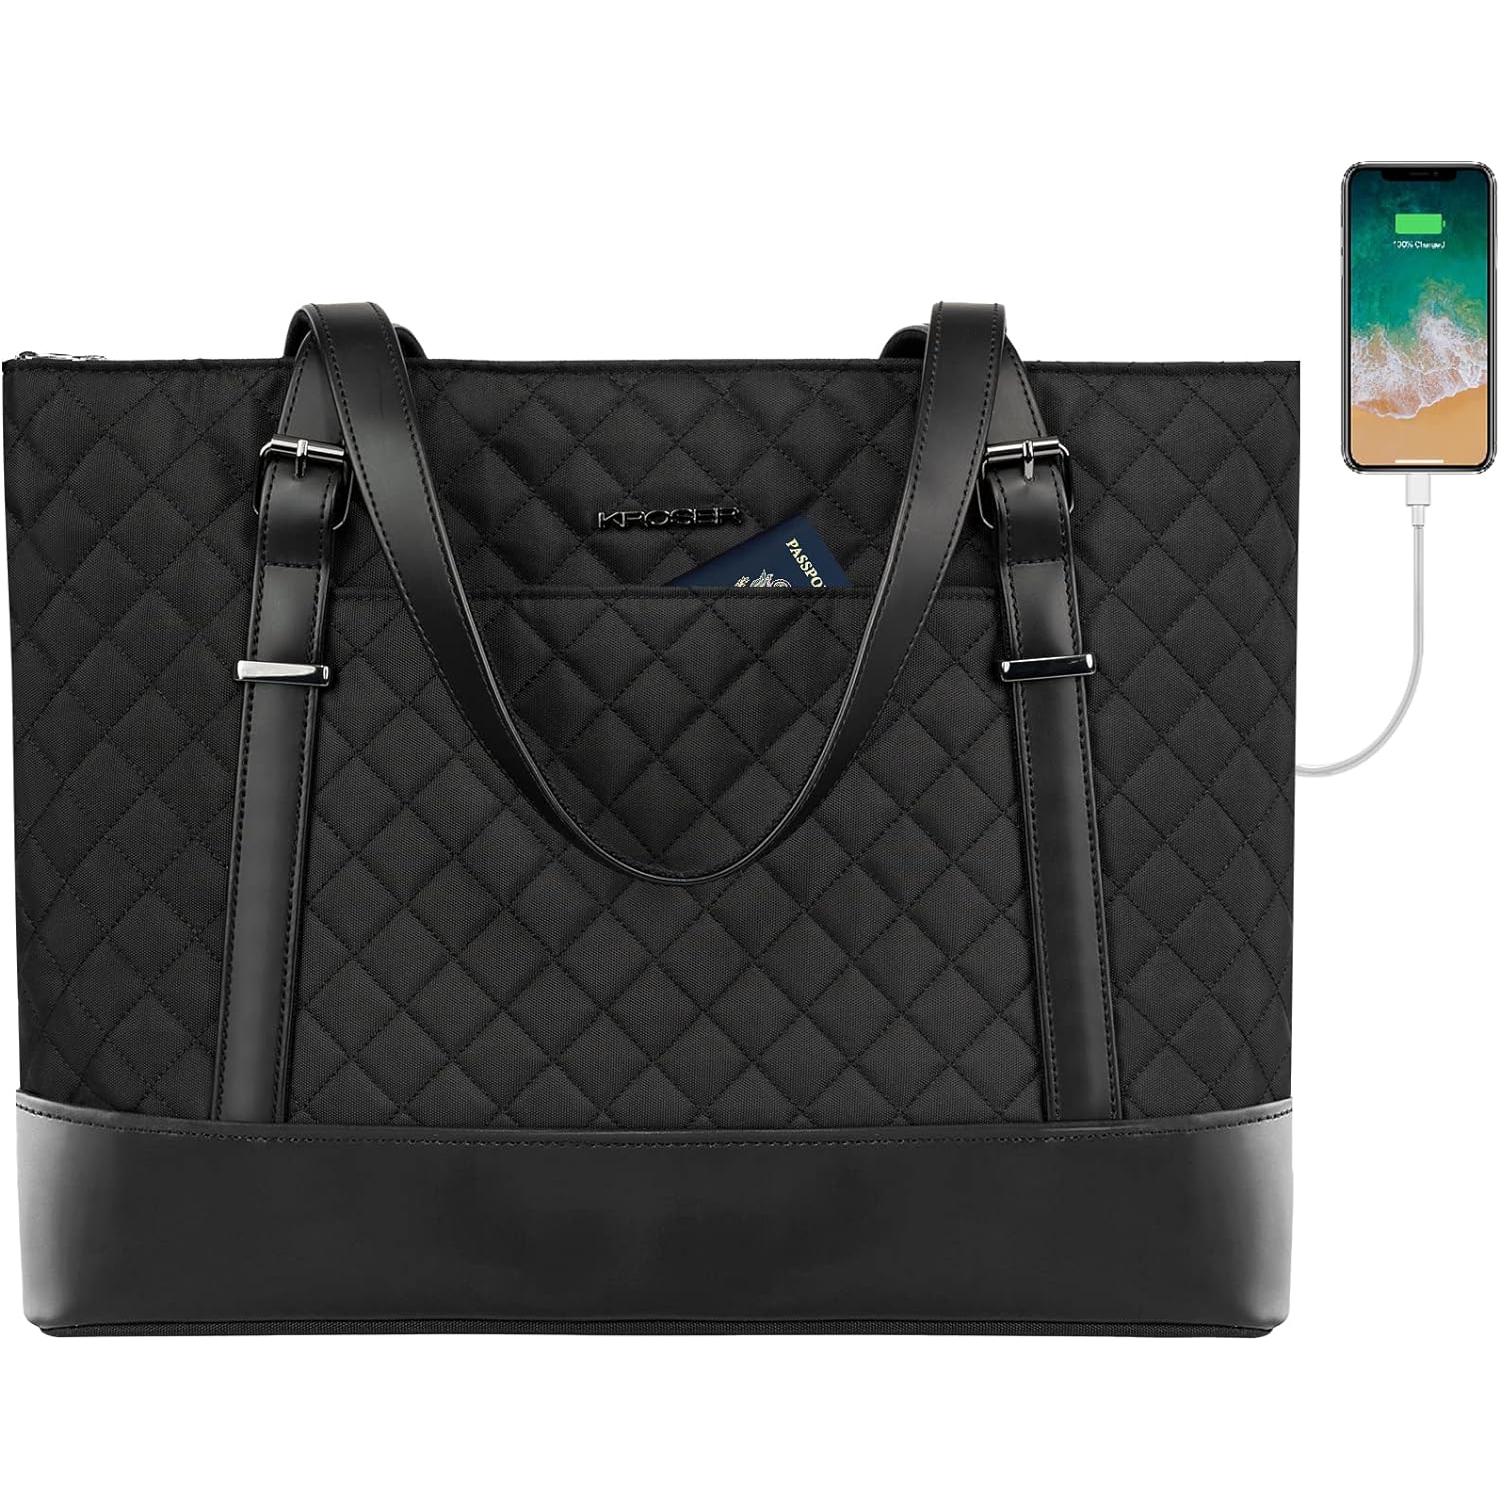 Laptop Tote Bag 15.6 Inch with USB Port, Large Work Tote Bag Computer Shoulder Bag for Women, Laptop Carrying